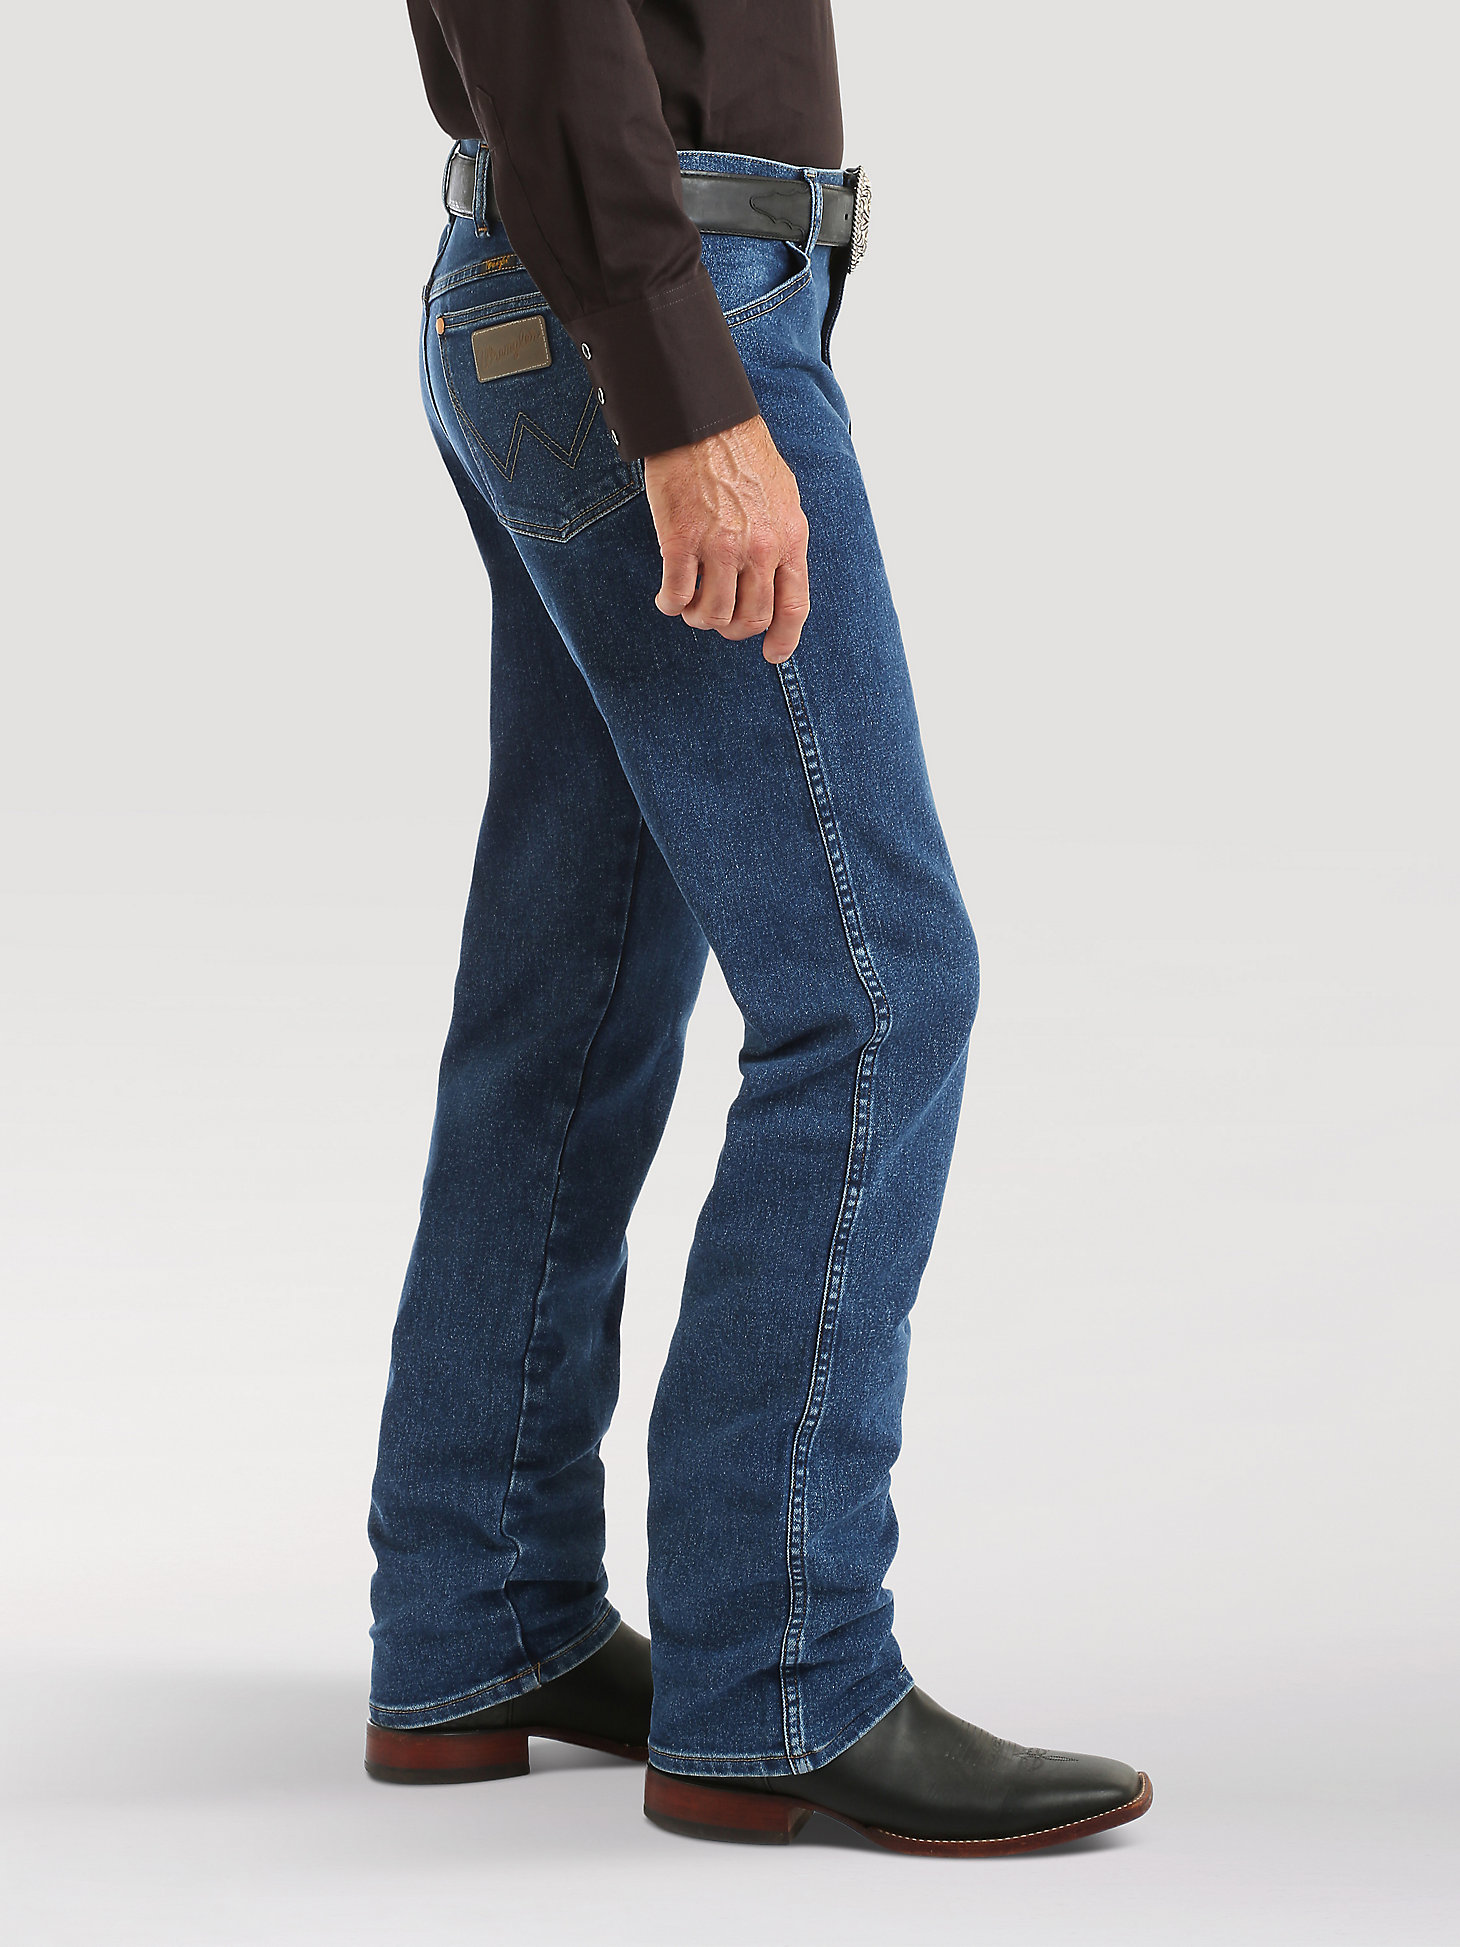 Wrangler® Cowboy Cut® Original Fit Active Flex Jeans in Stonewash alternative view 2